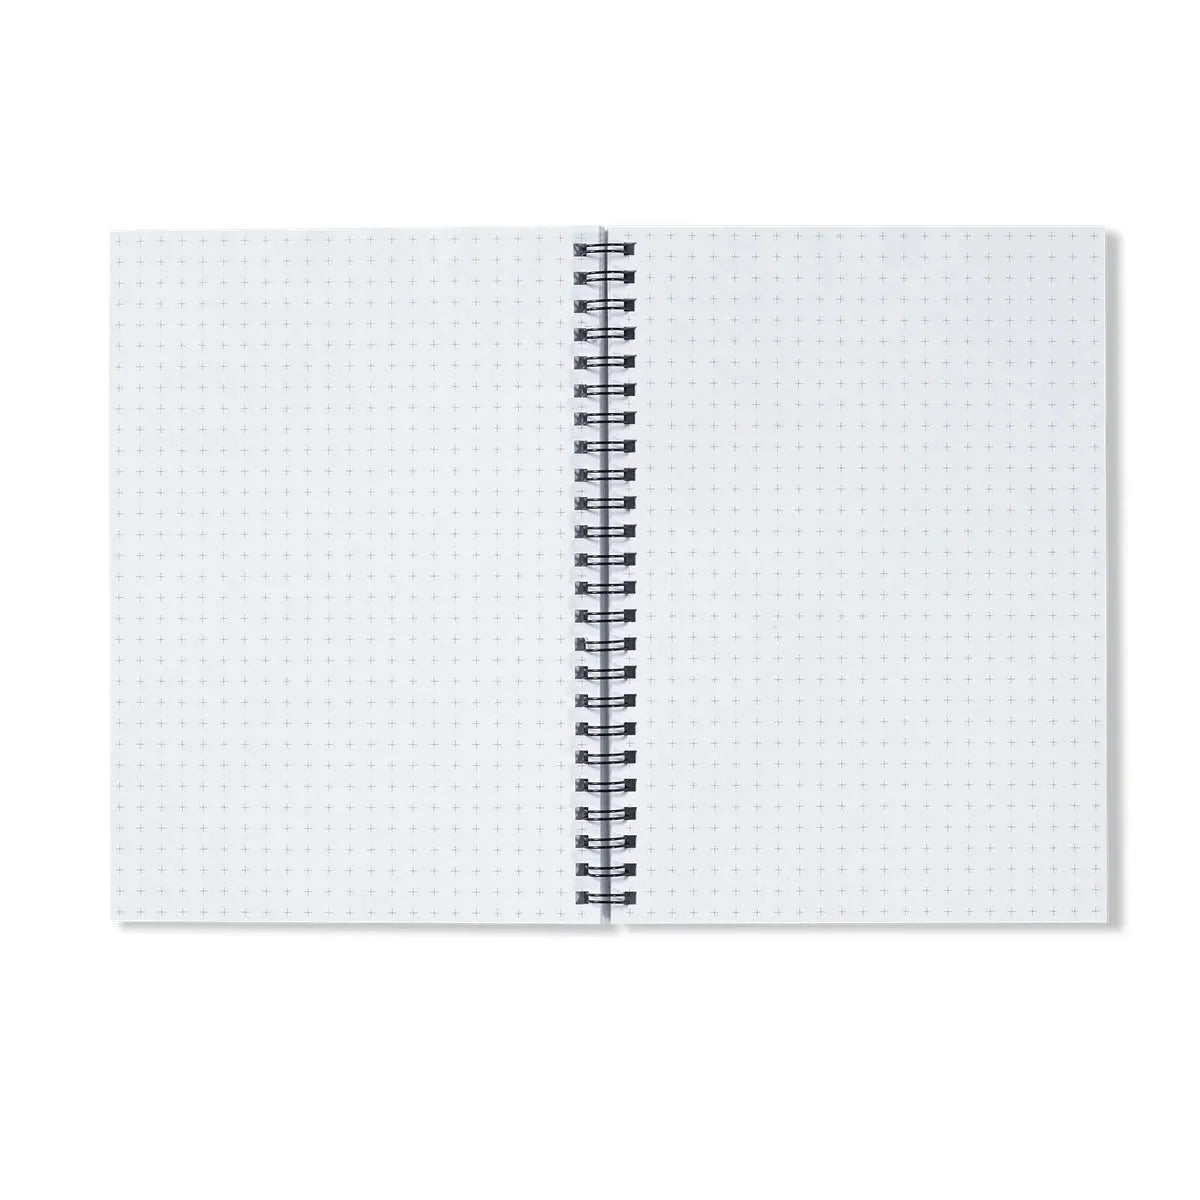 Field Of Dreams Notebook - Notebooks & Notepads - Aesthetic Art